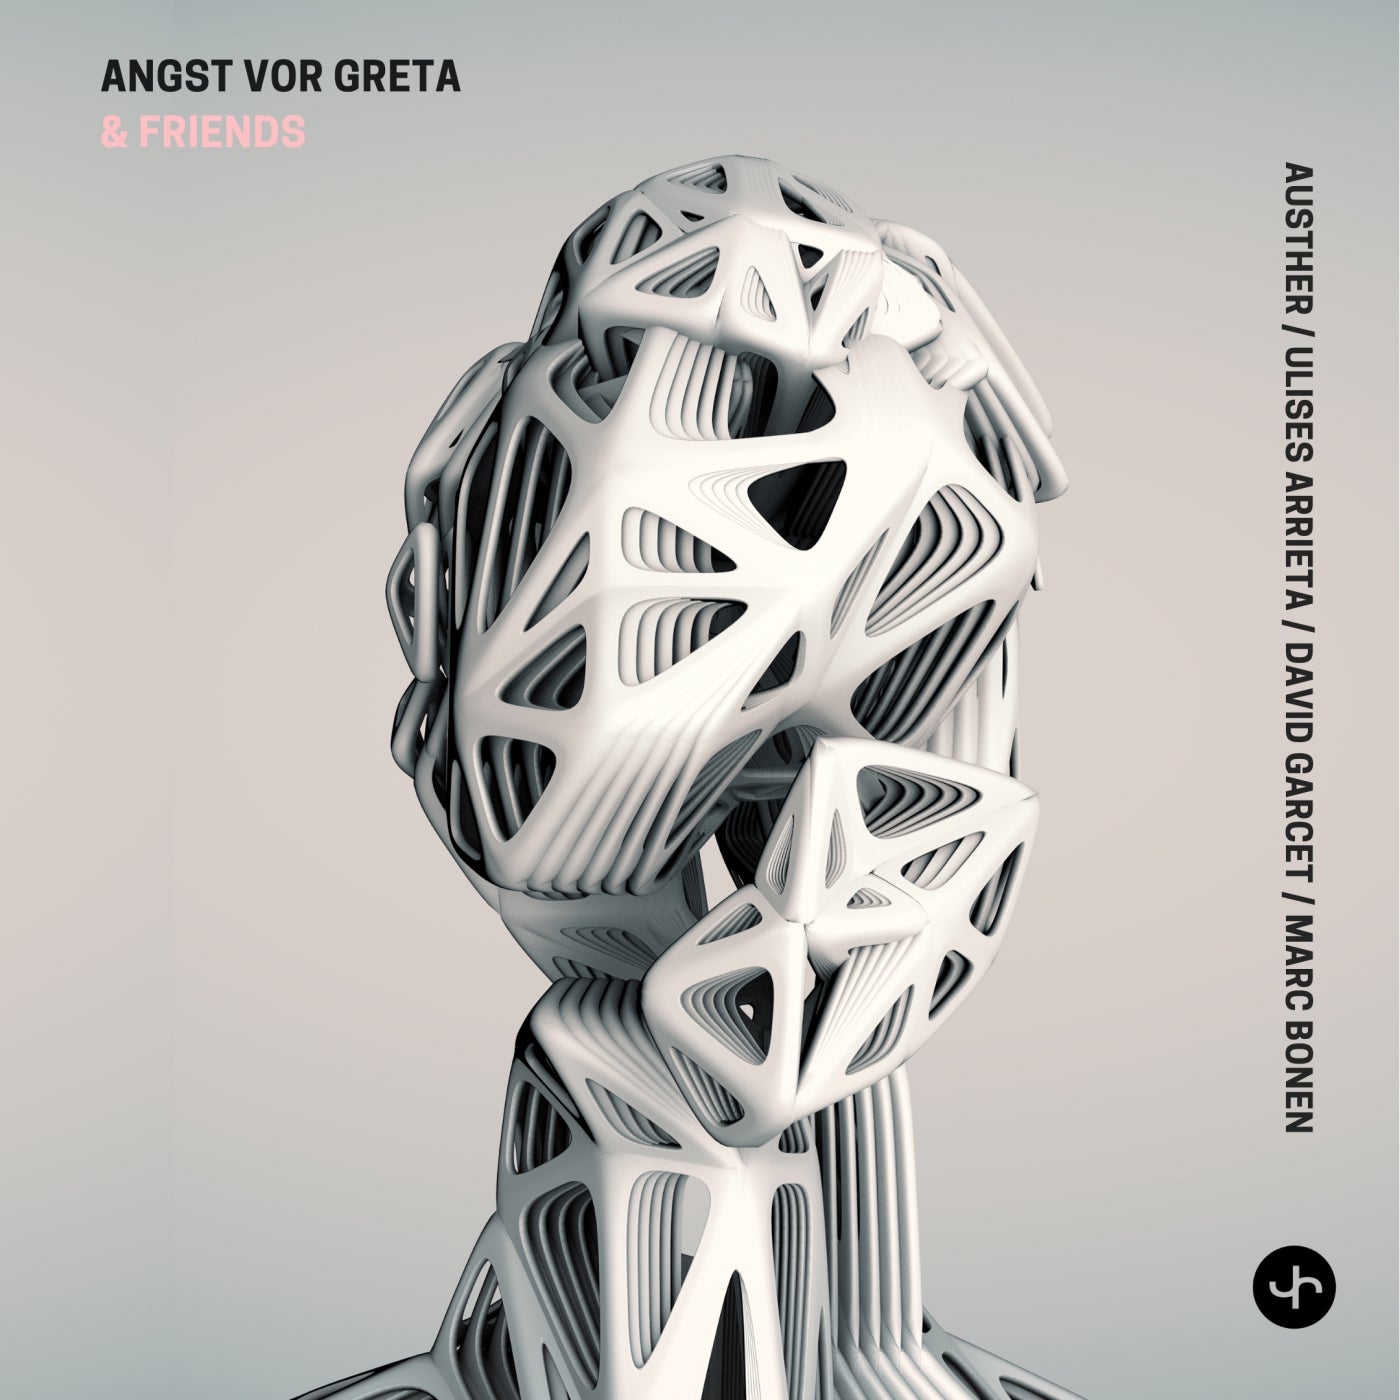 Ulises Arrieta Feat. Angst Vor Greta - Flashback (Original Mix)